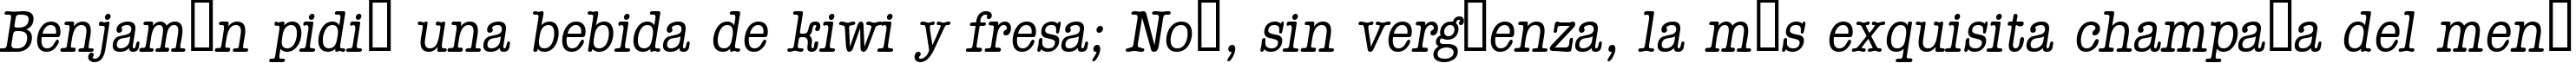 Пример написания шрифтом a_OldTyperNr Italic текста на испанском